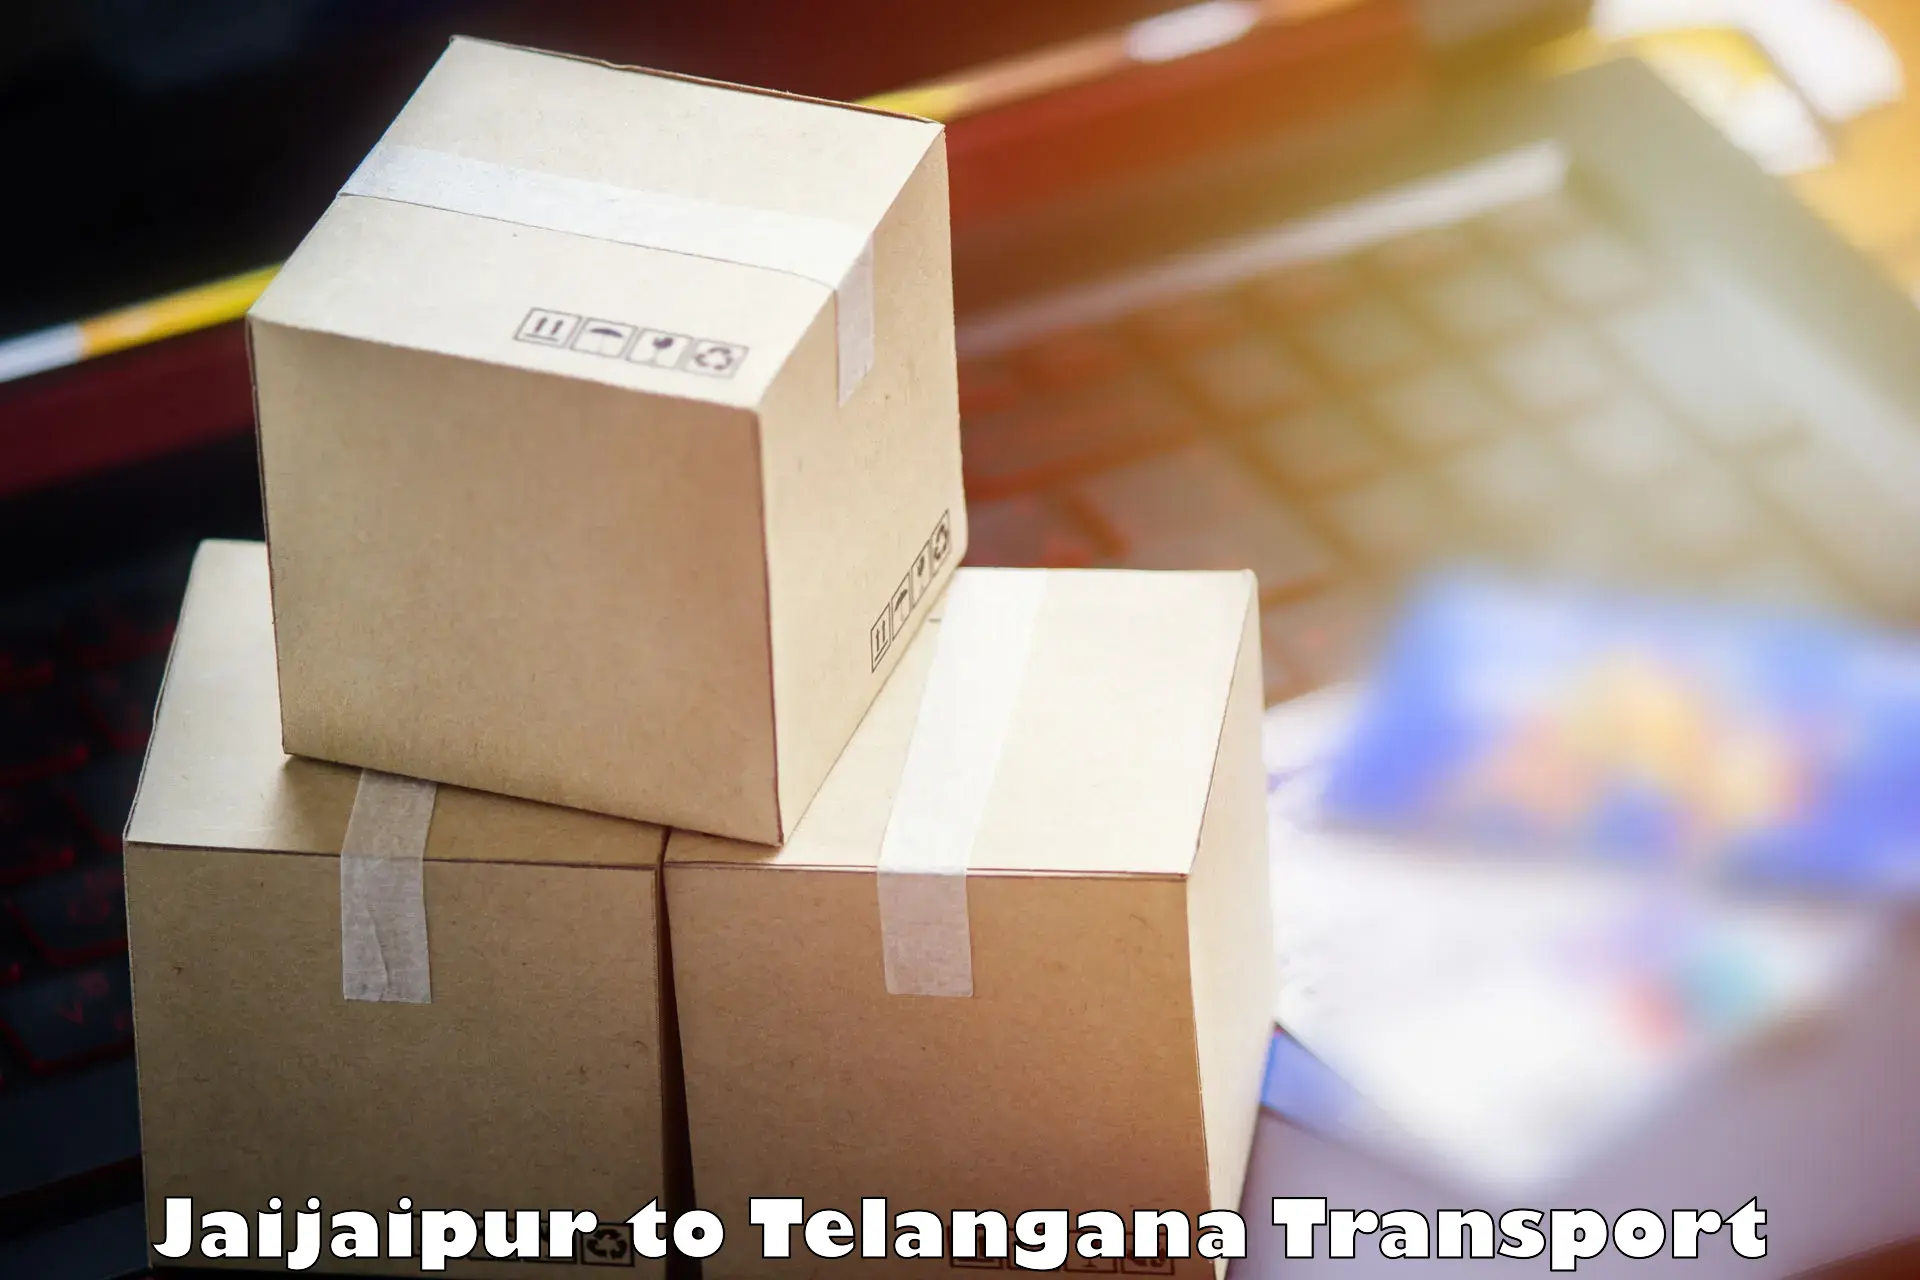 Delivery service Jaijaipur to Bodhan